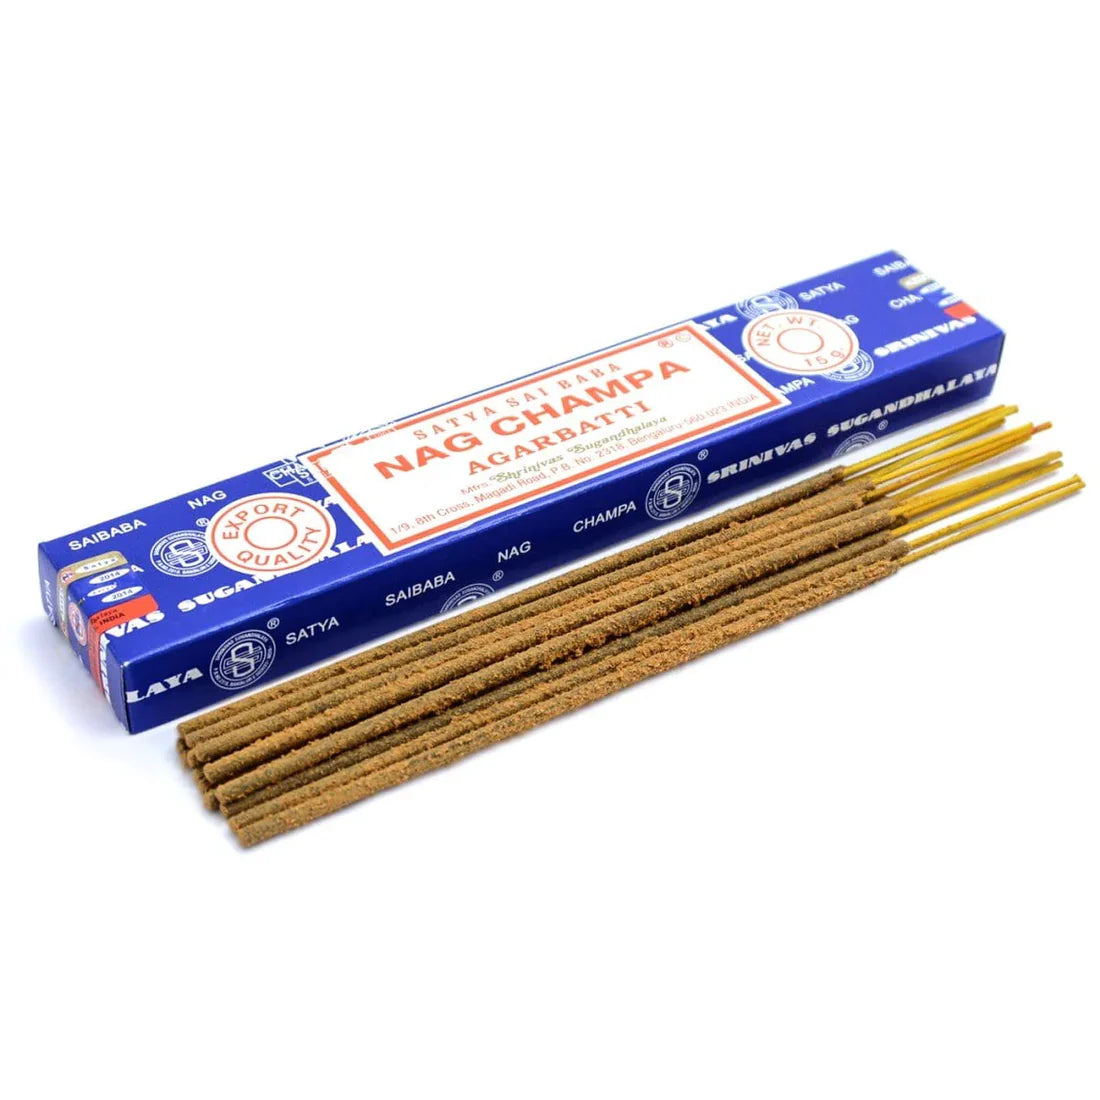 Nag Champa Agarbatti Incense Sticks Prepack Of 12